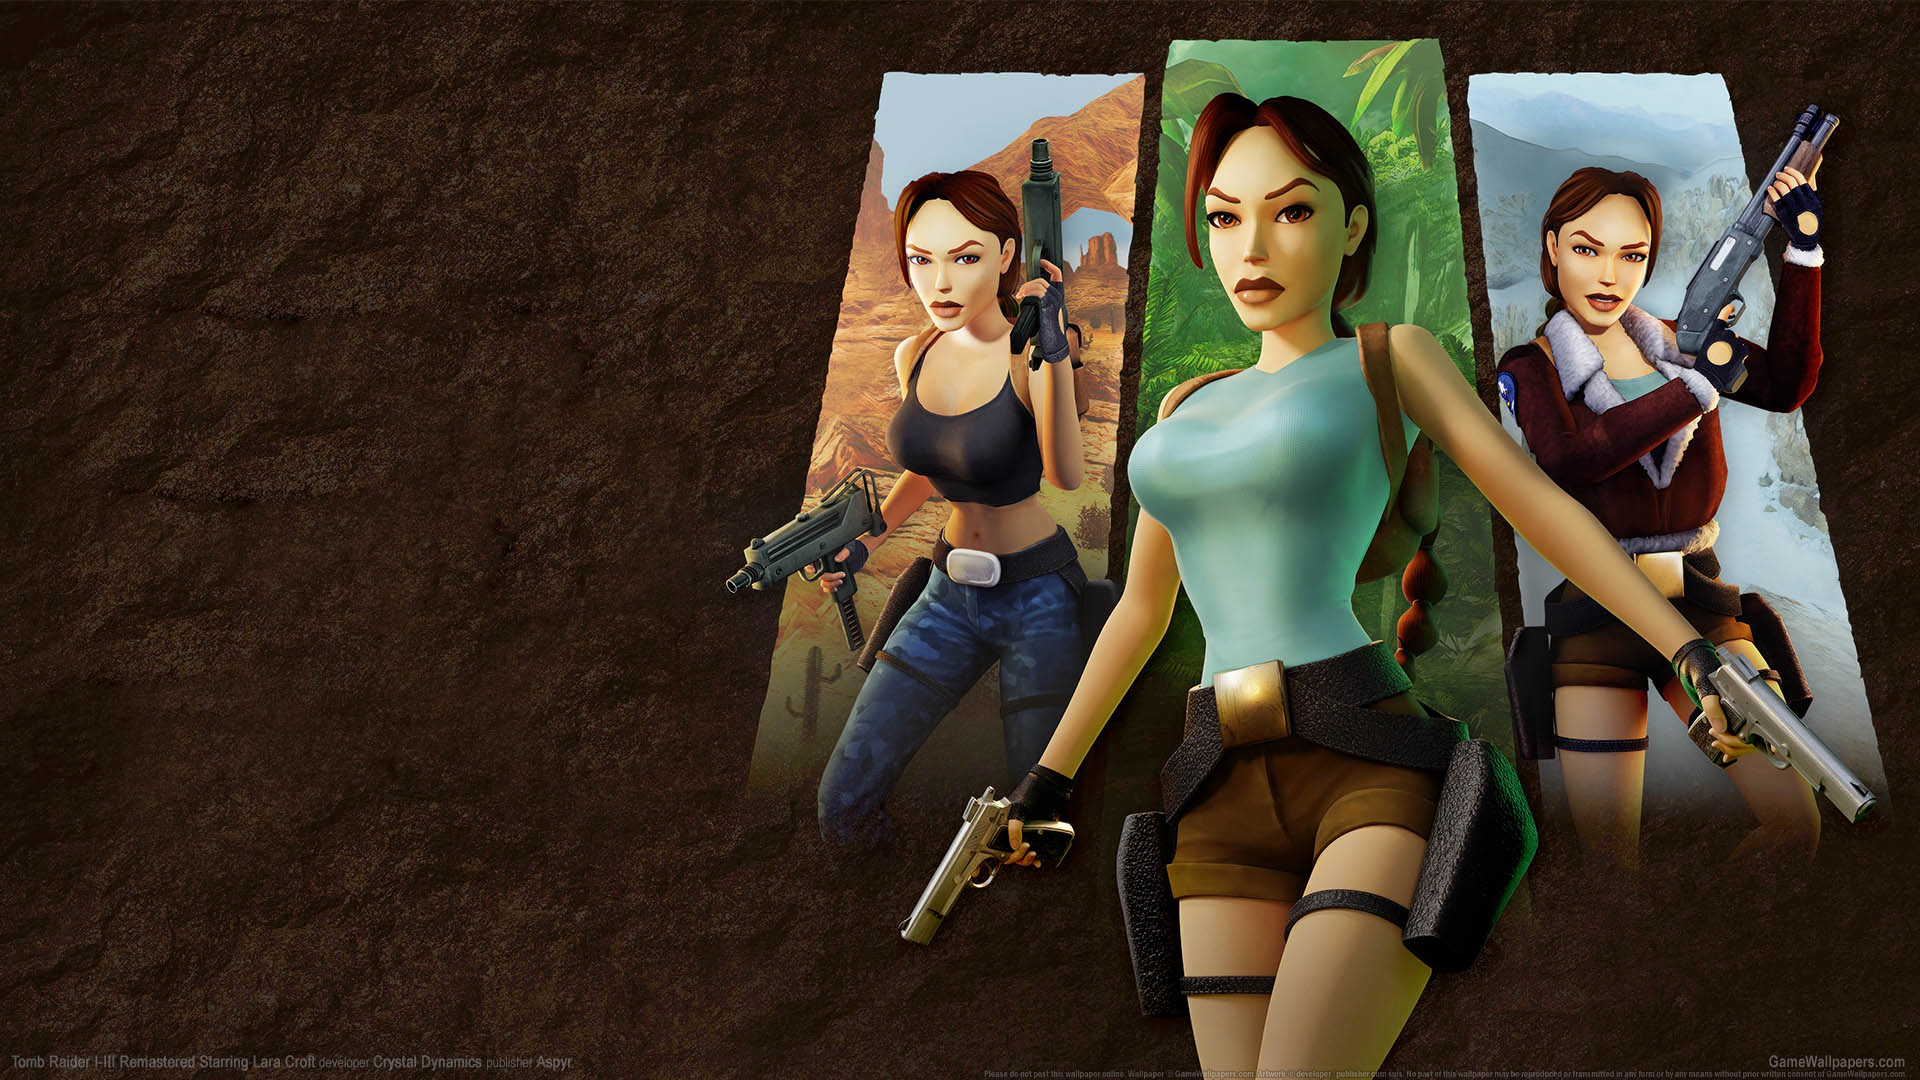 Tomb Raider I-III Remastered Starring Lara Croft fondo de escritorio 01 1920x1080